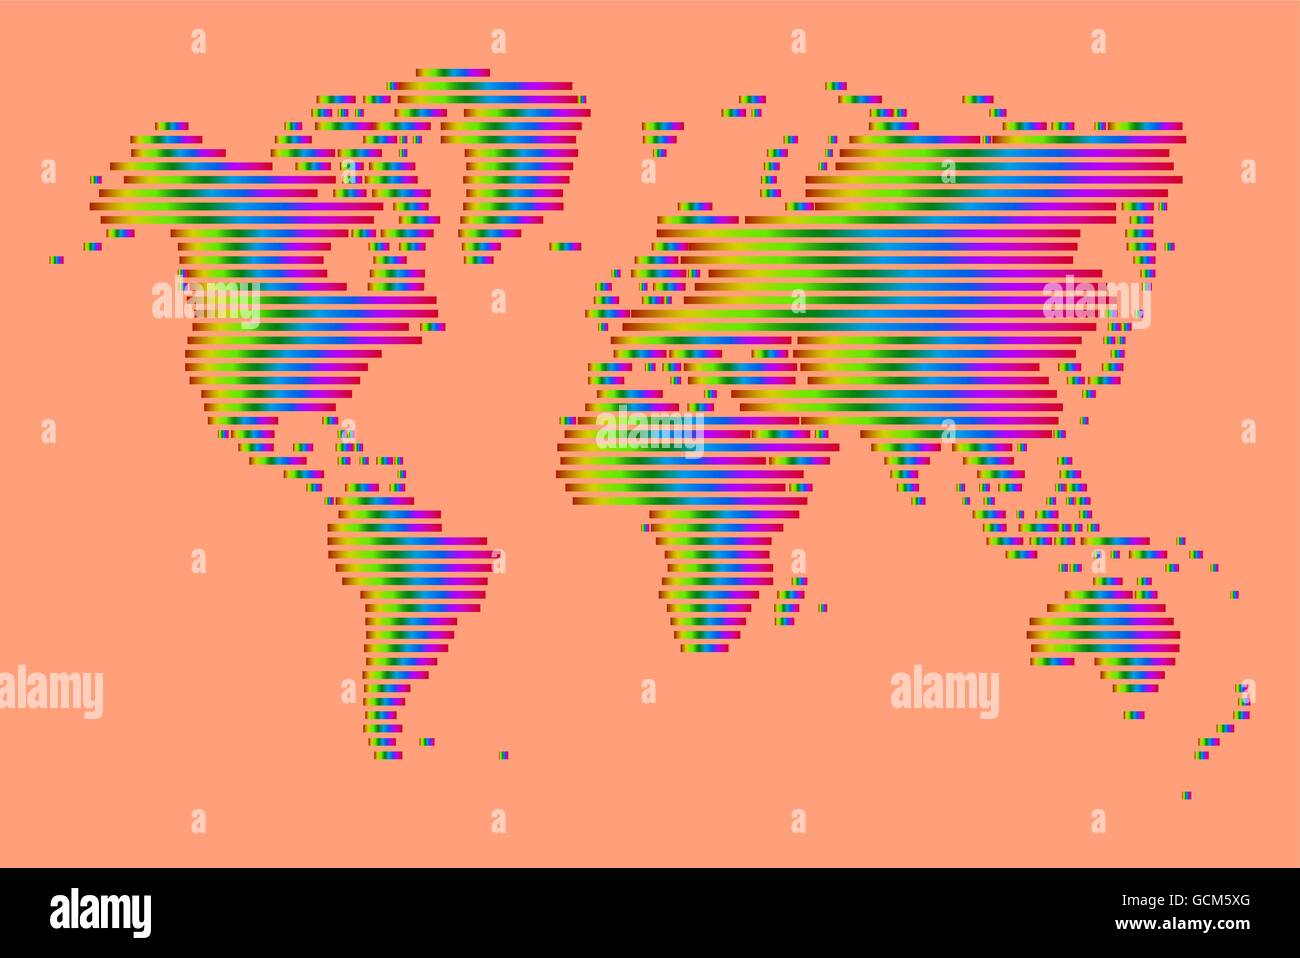 Abstrakte Computer Grafik Weltkarte der bunten Linien. Vektor-Illustration. Stock Vektor